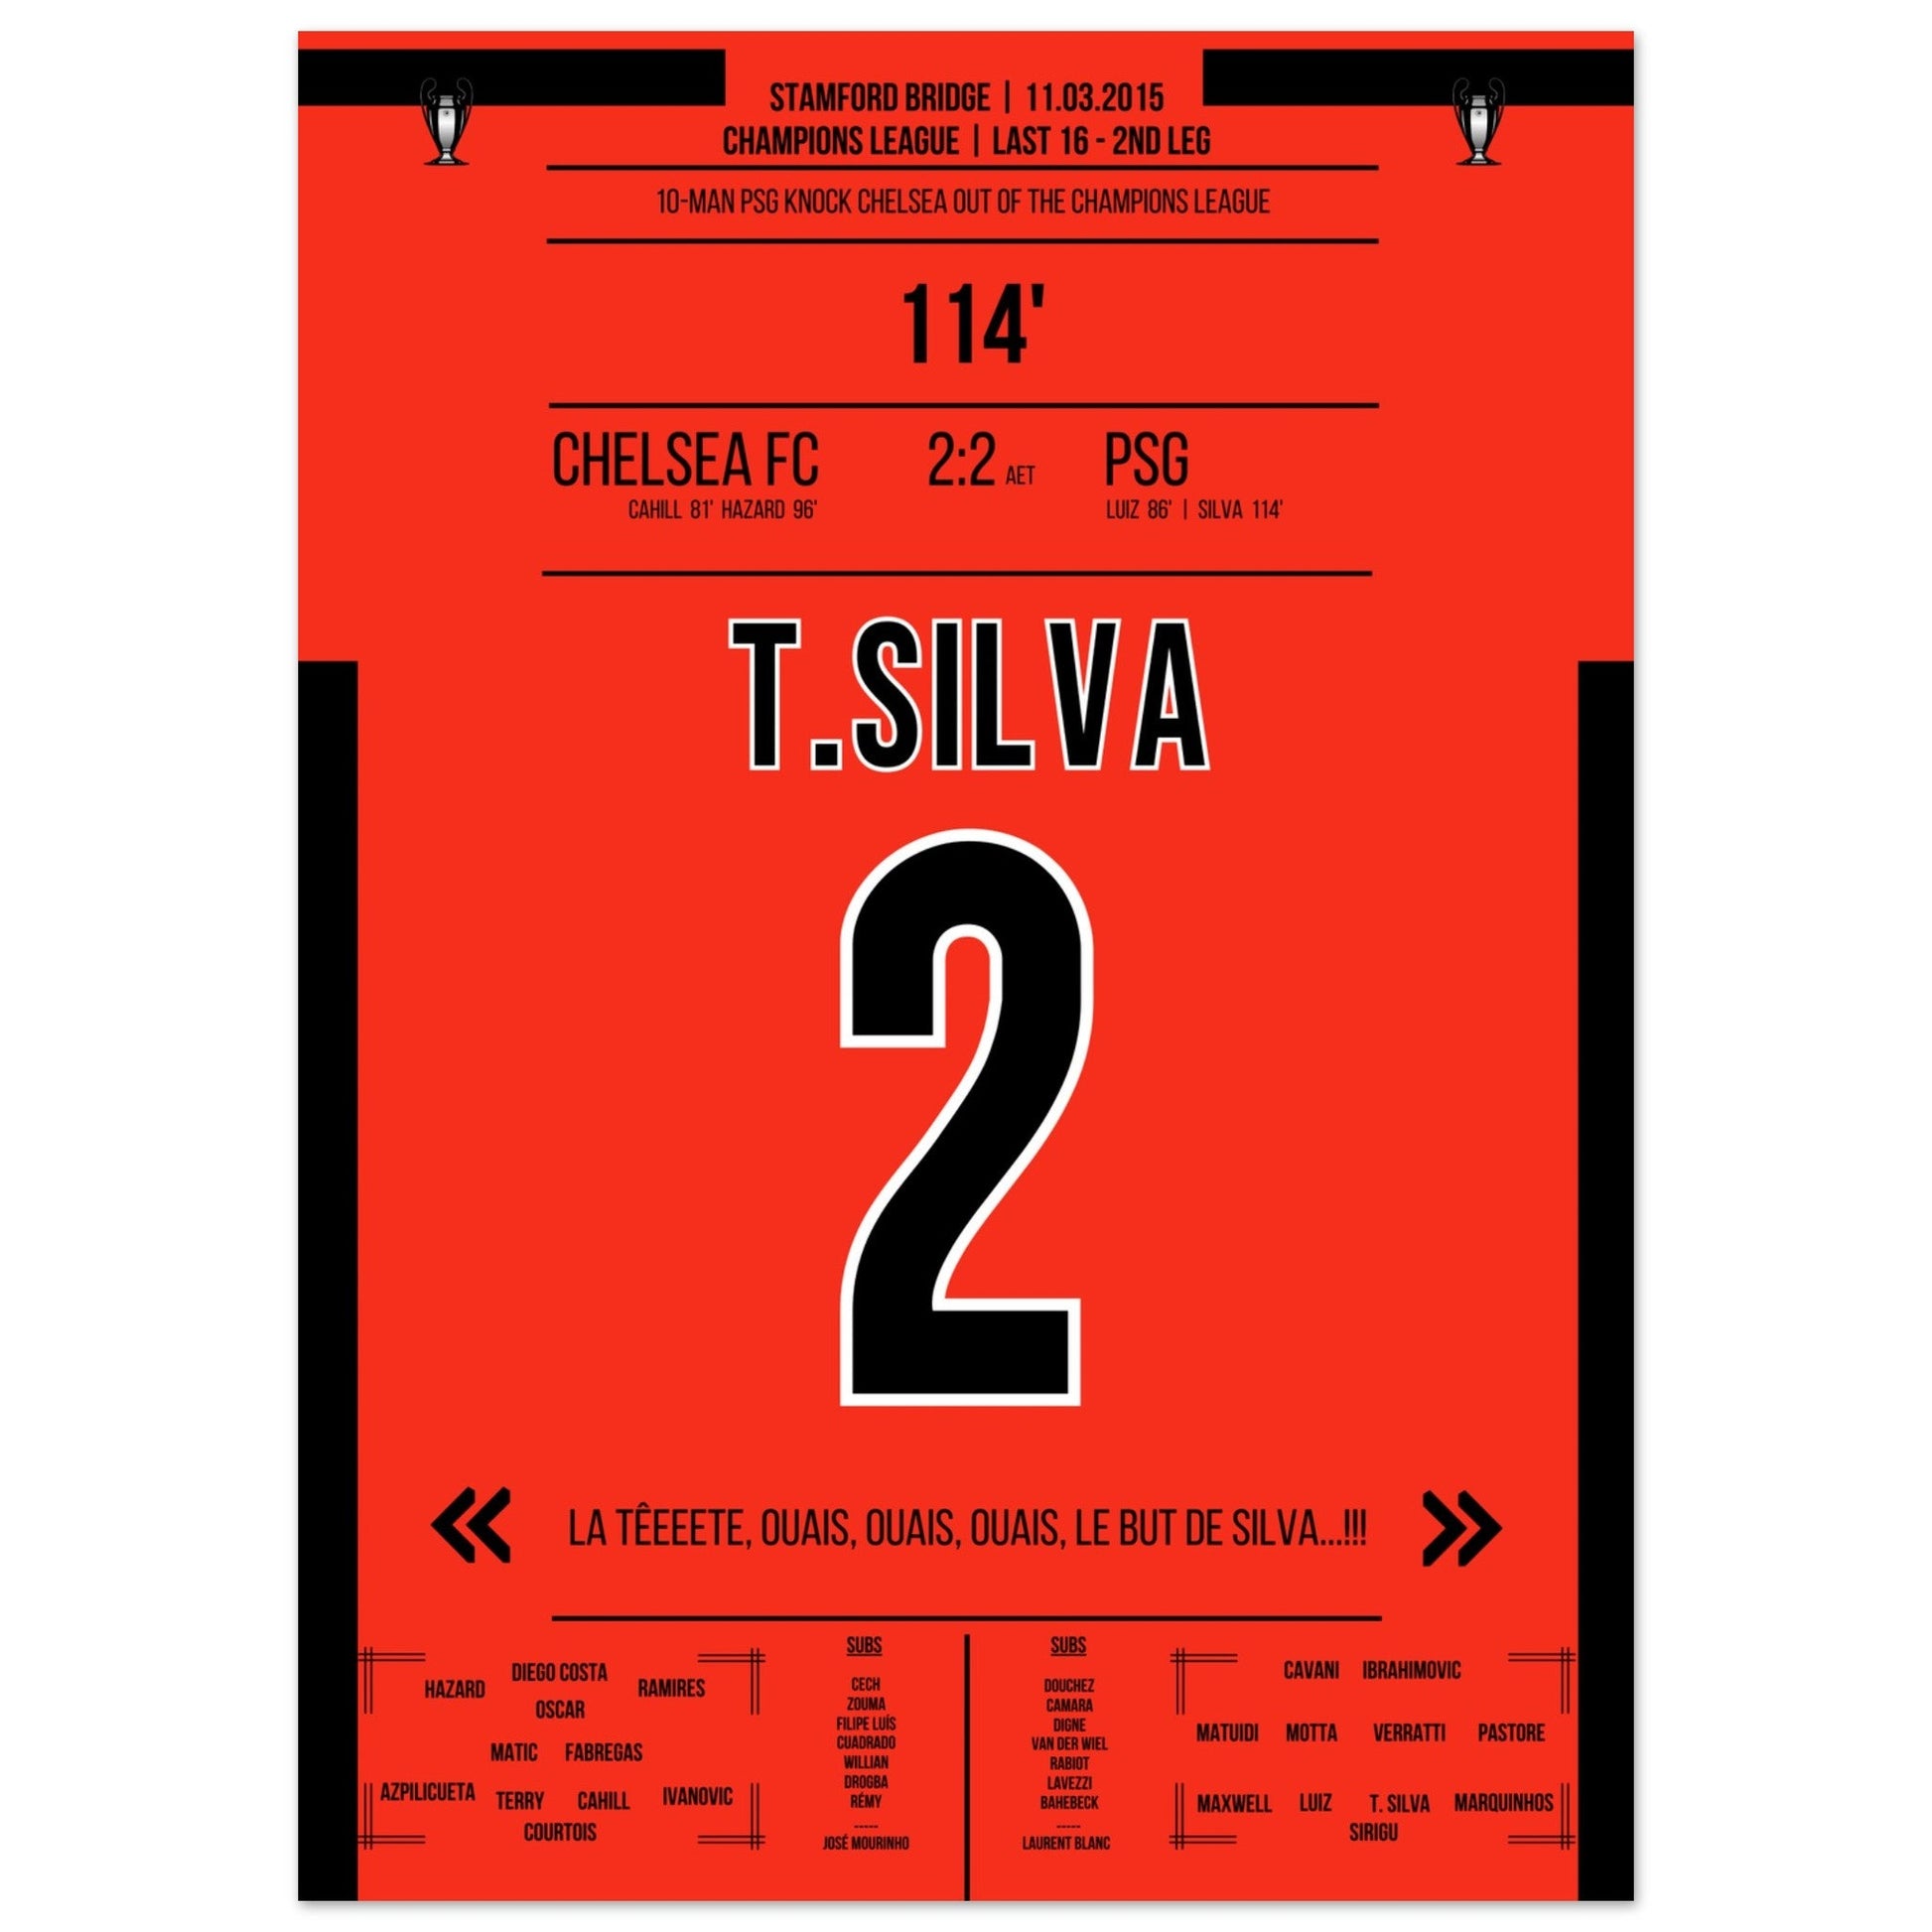 Thiago Silva's entscheidendes Kopfballtor im CL Achtelfinale gegen Chelsea 2015 50x70-cm-20x28-Ohne-Rahmen